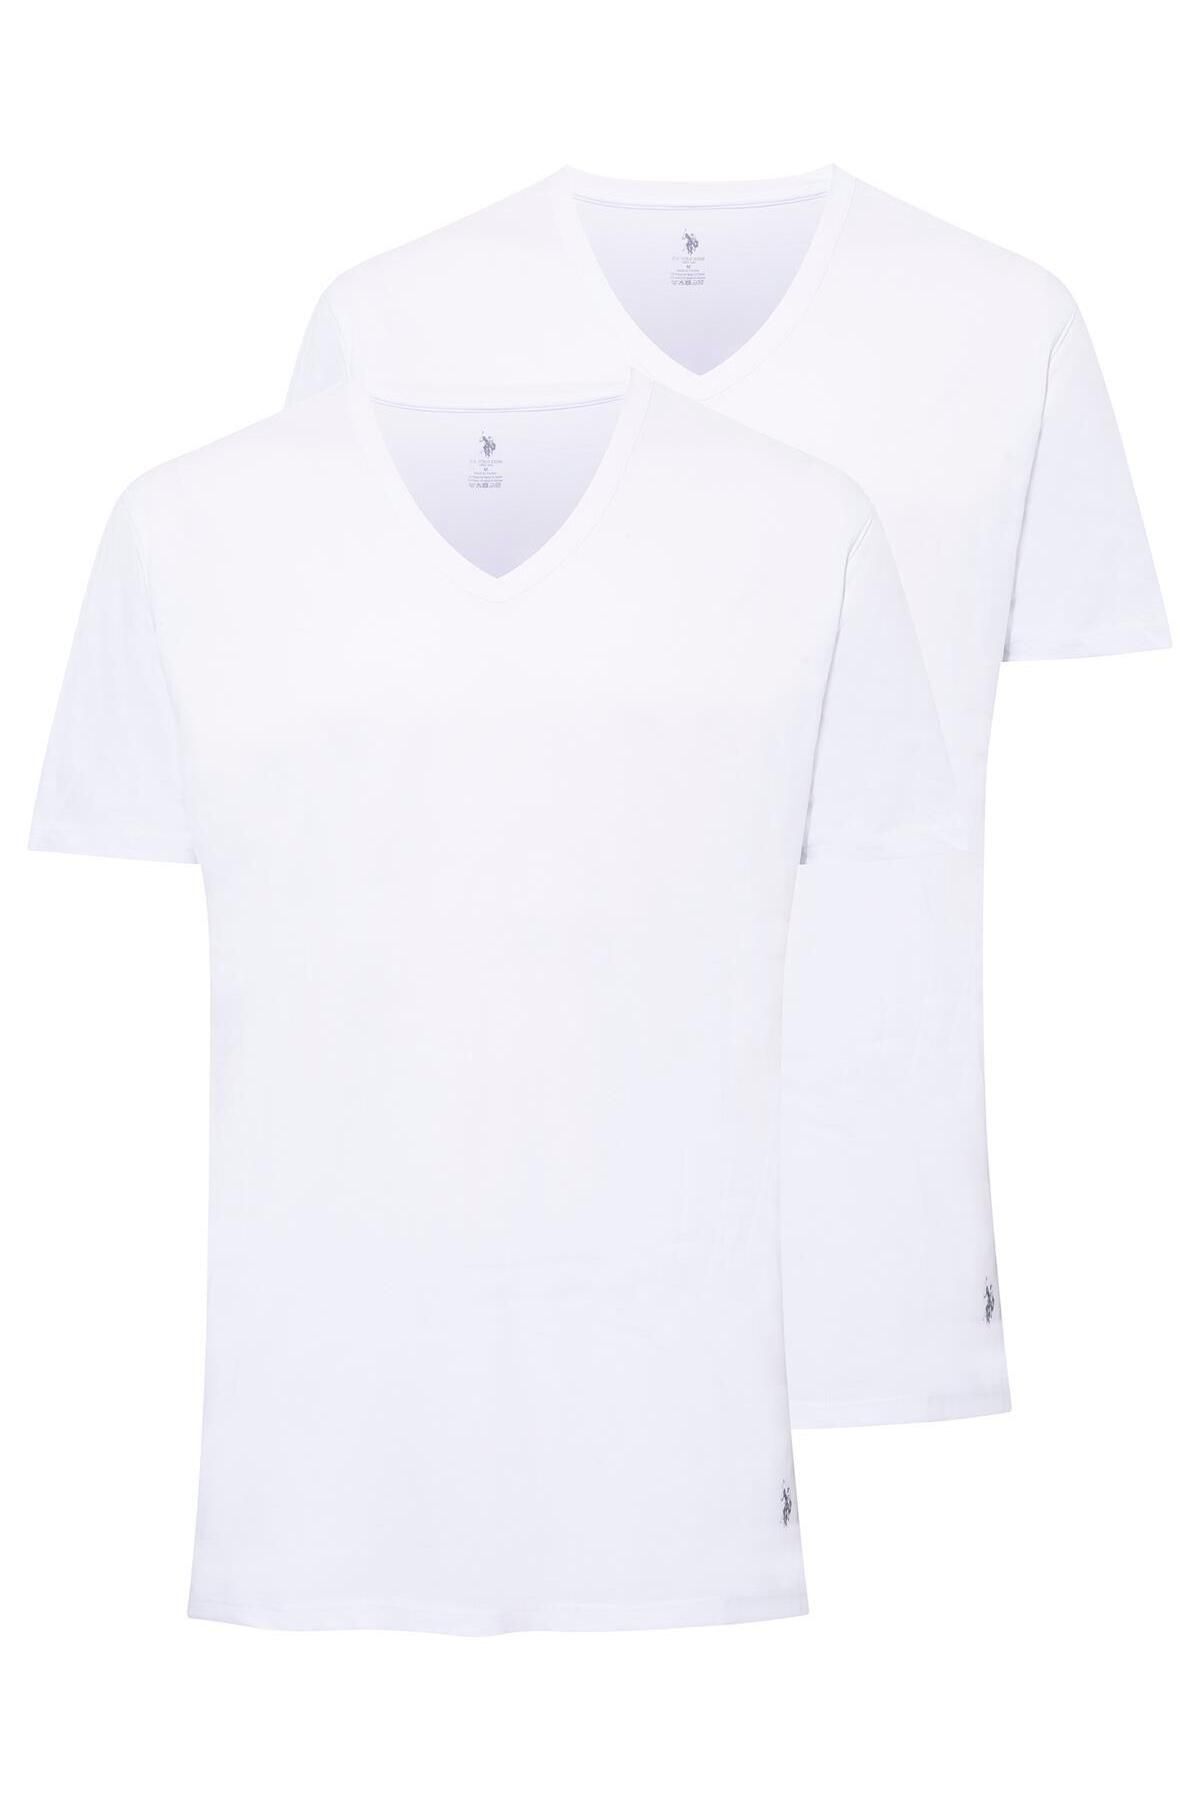 U.S. Polo Assn. - Erkek Battal Beyaz 2 Li V Yaka T-shirt 90001